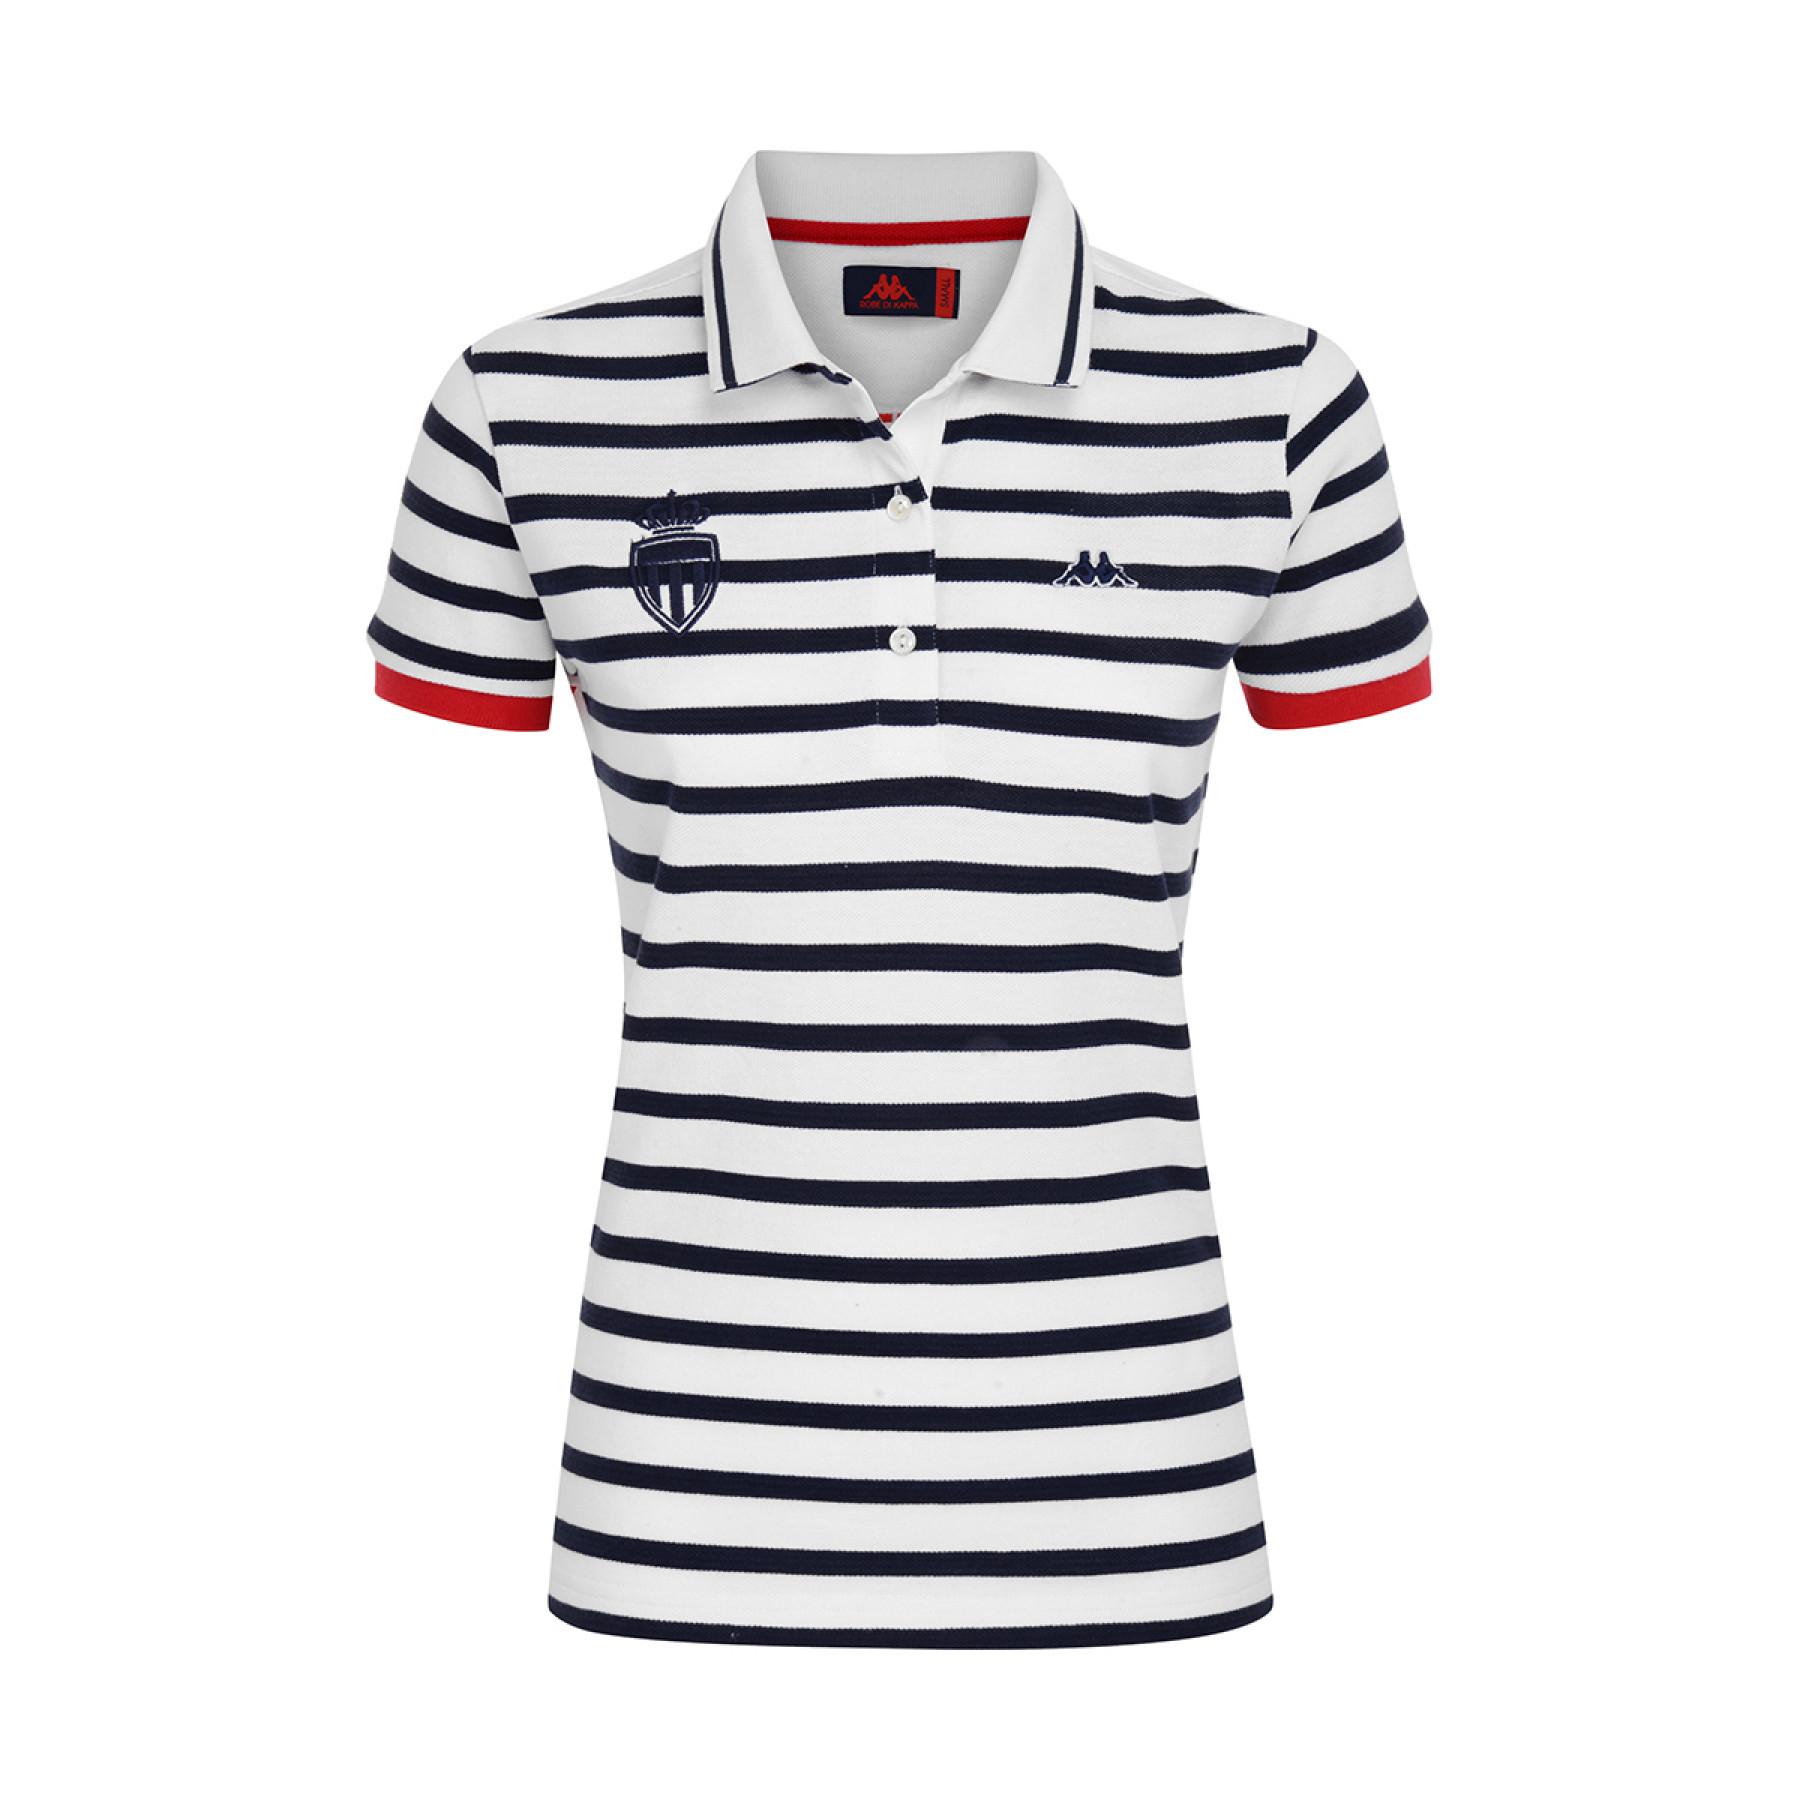 Women's polo shirt AS Monaco 2020/21 carole